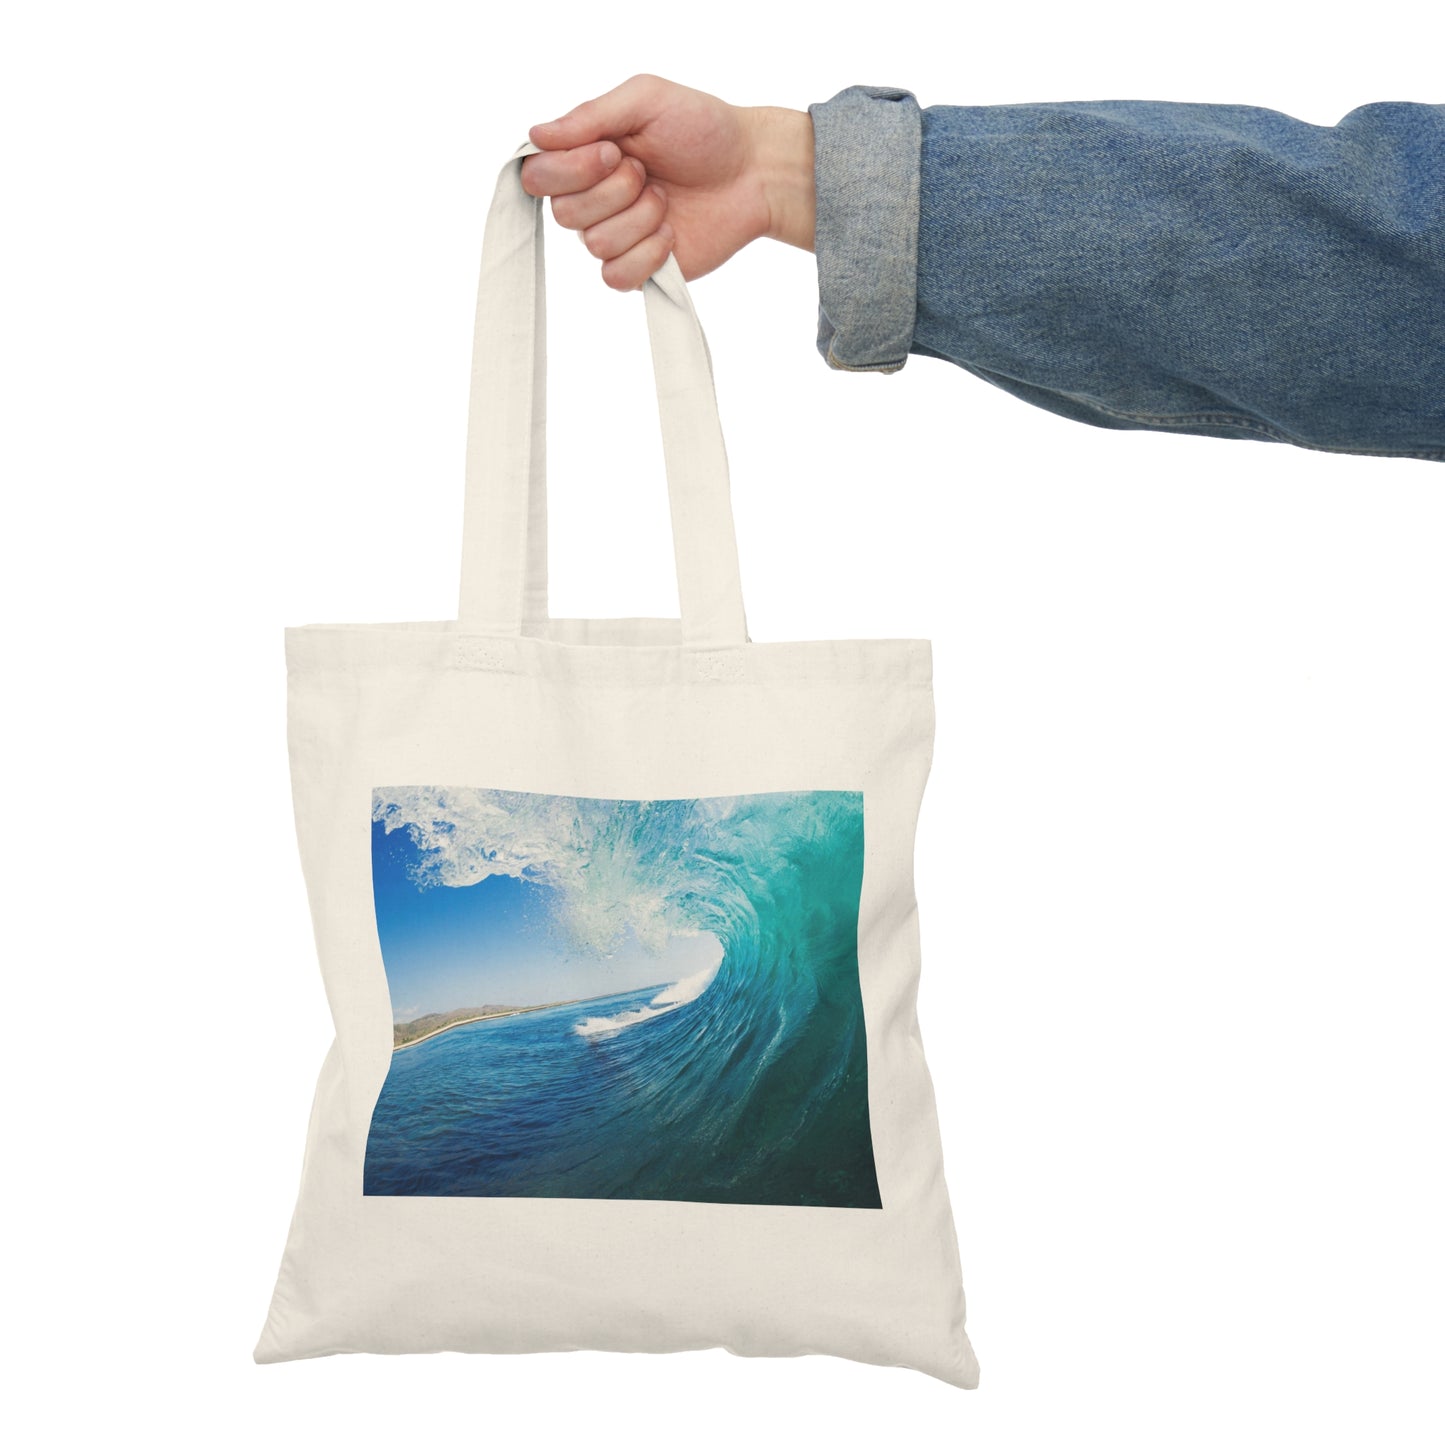 Surf Wave - Natural Tote Bag ~ Sharon Dawn Collection